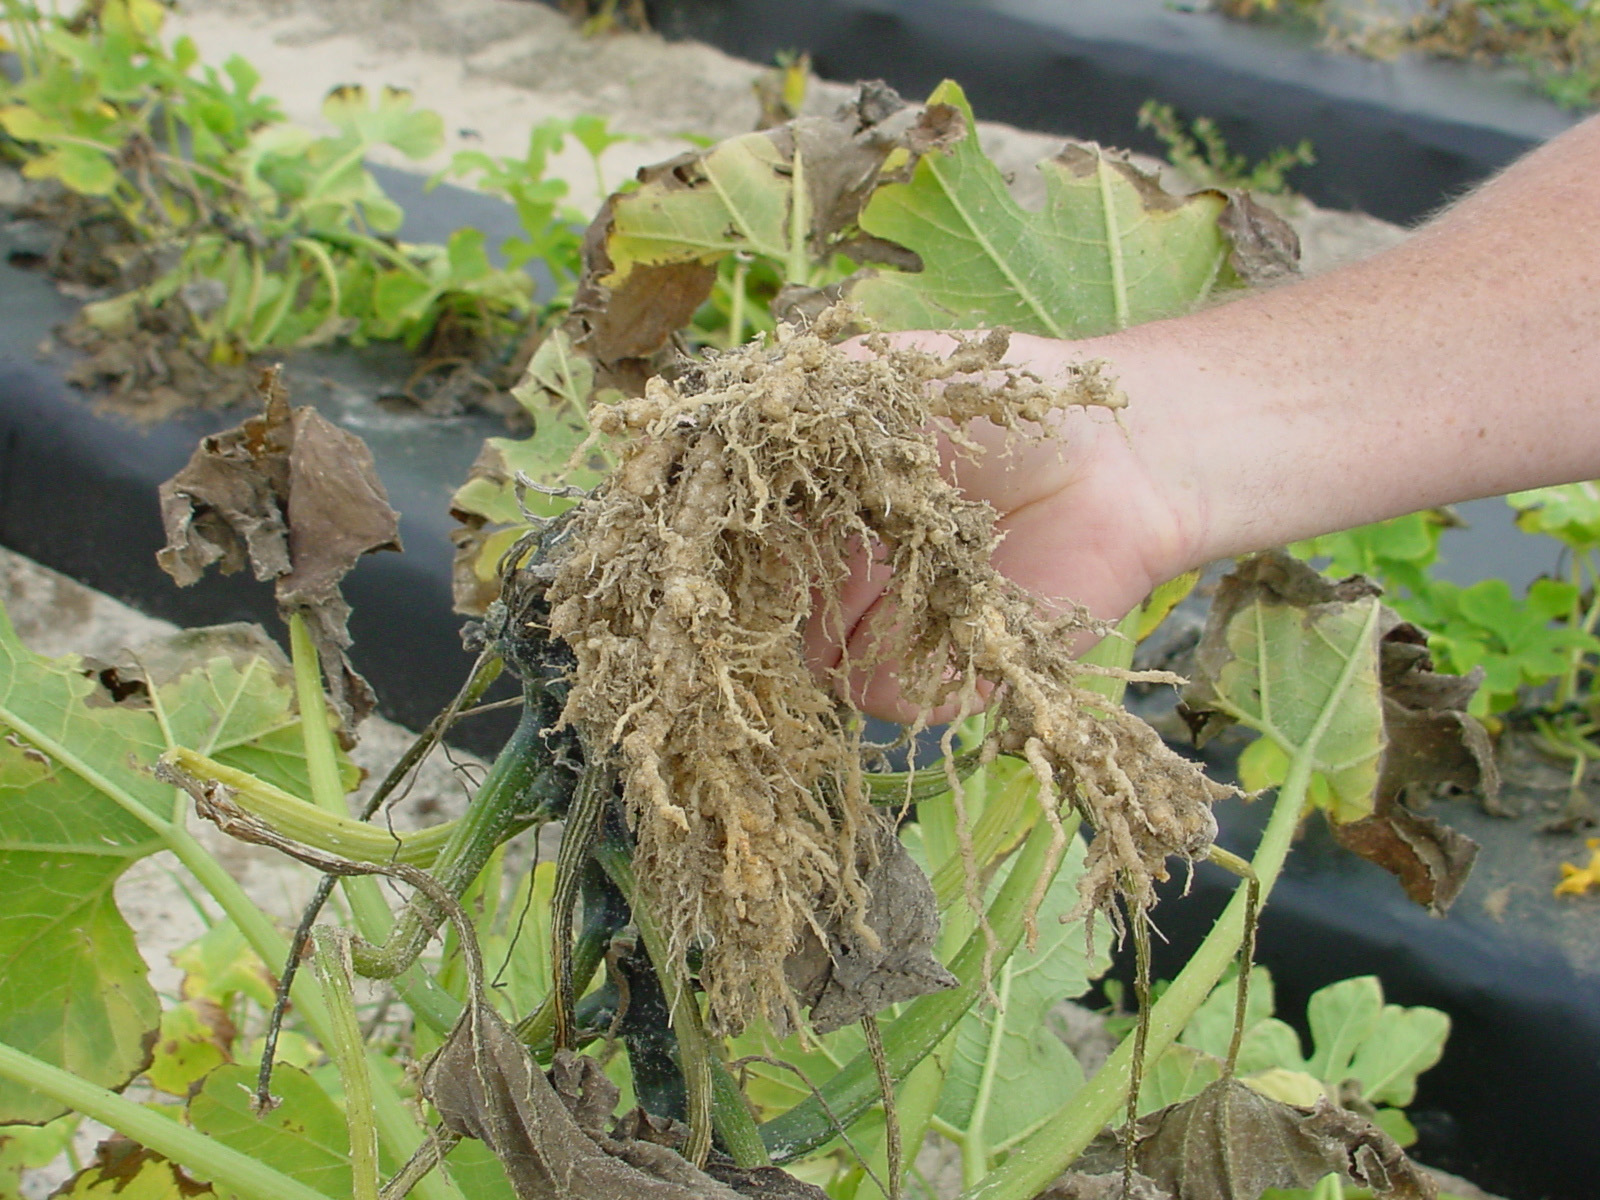 Root knot nematode symptoms on summer squash roots.